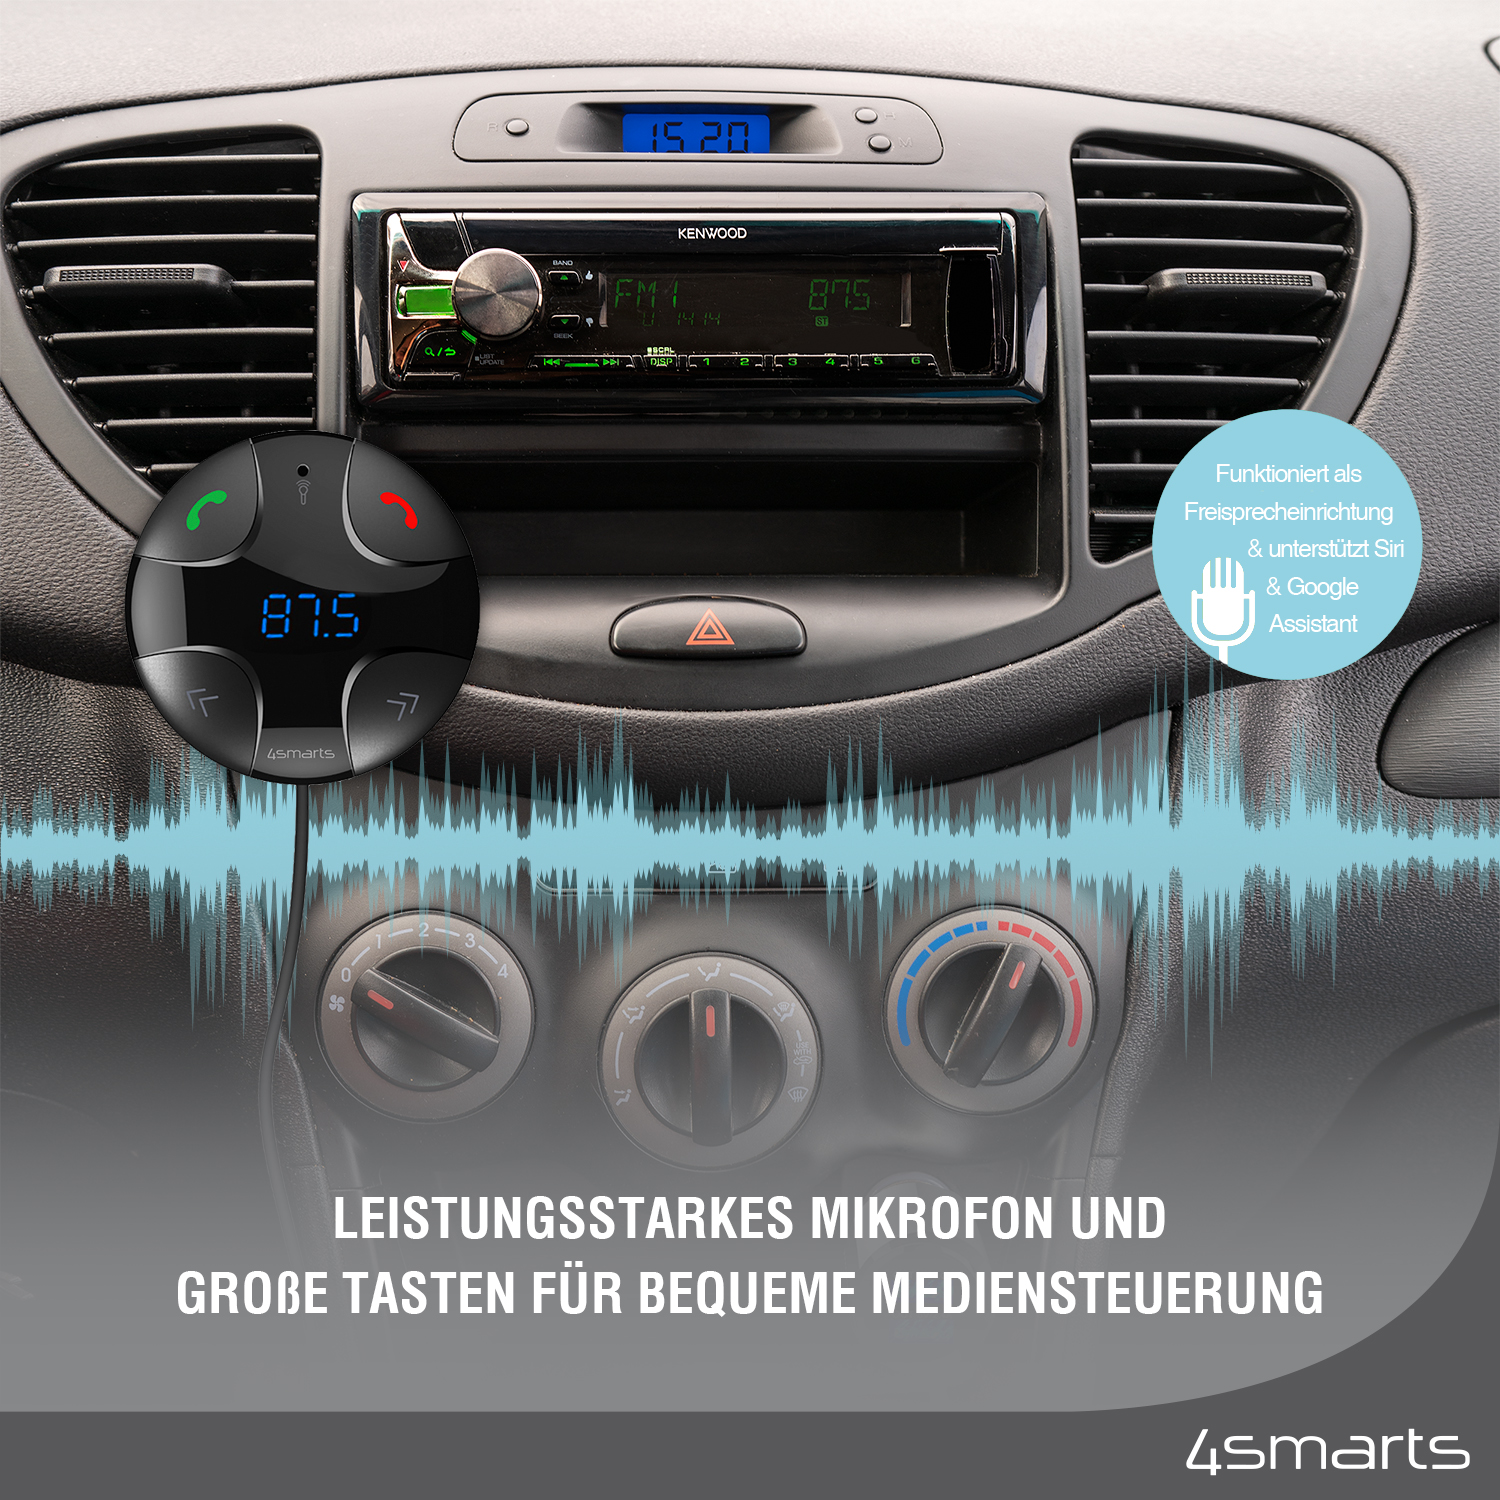 FM FM-Transmitter 4SMARTS KFZ Ladegerät Multimedia-In, Bluetooth Transmitter DashRemote Freisprechfunktion, mit